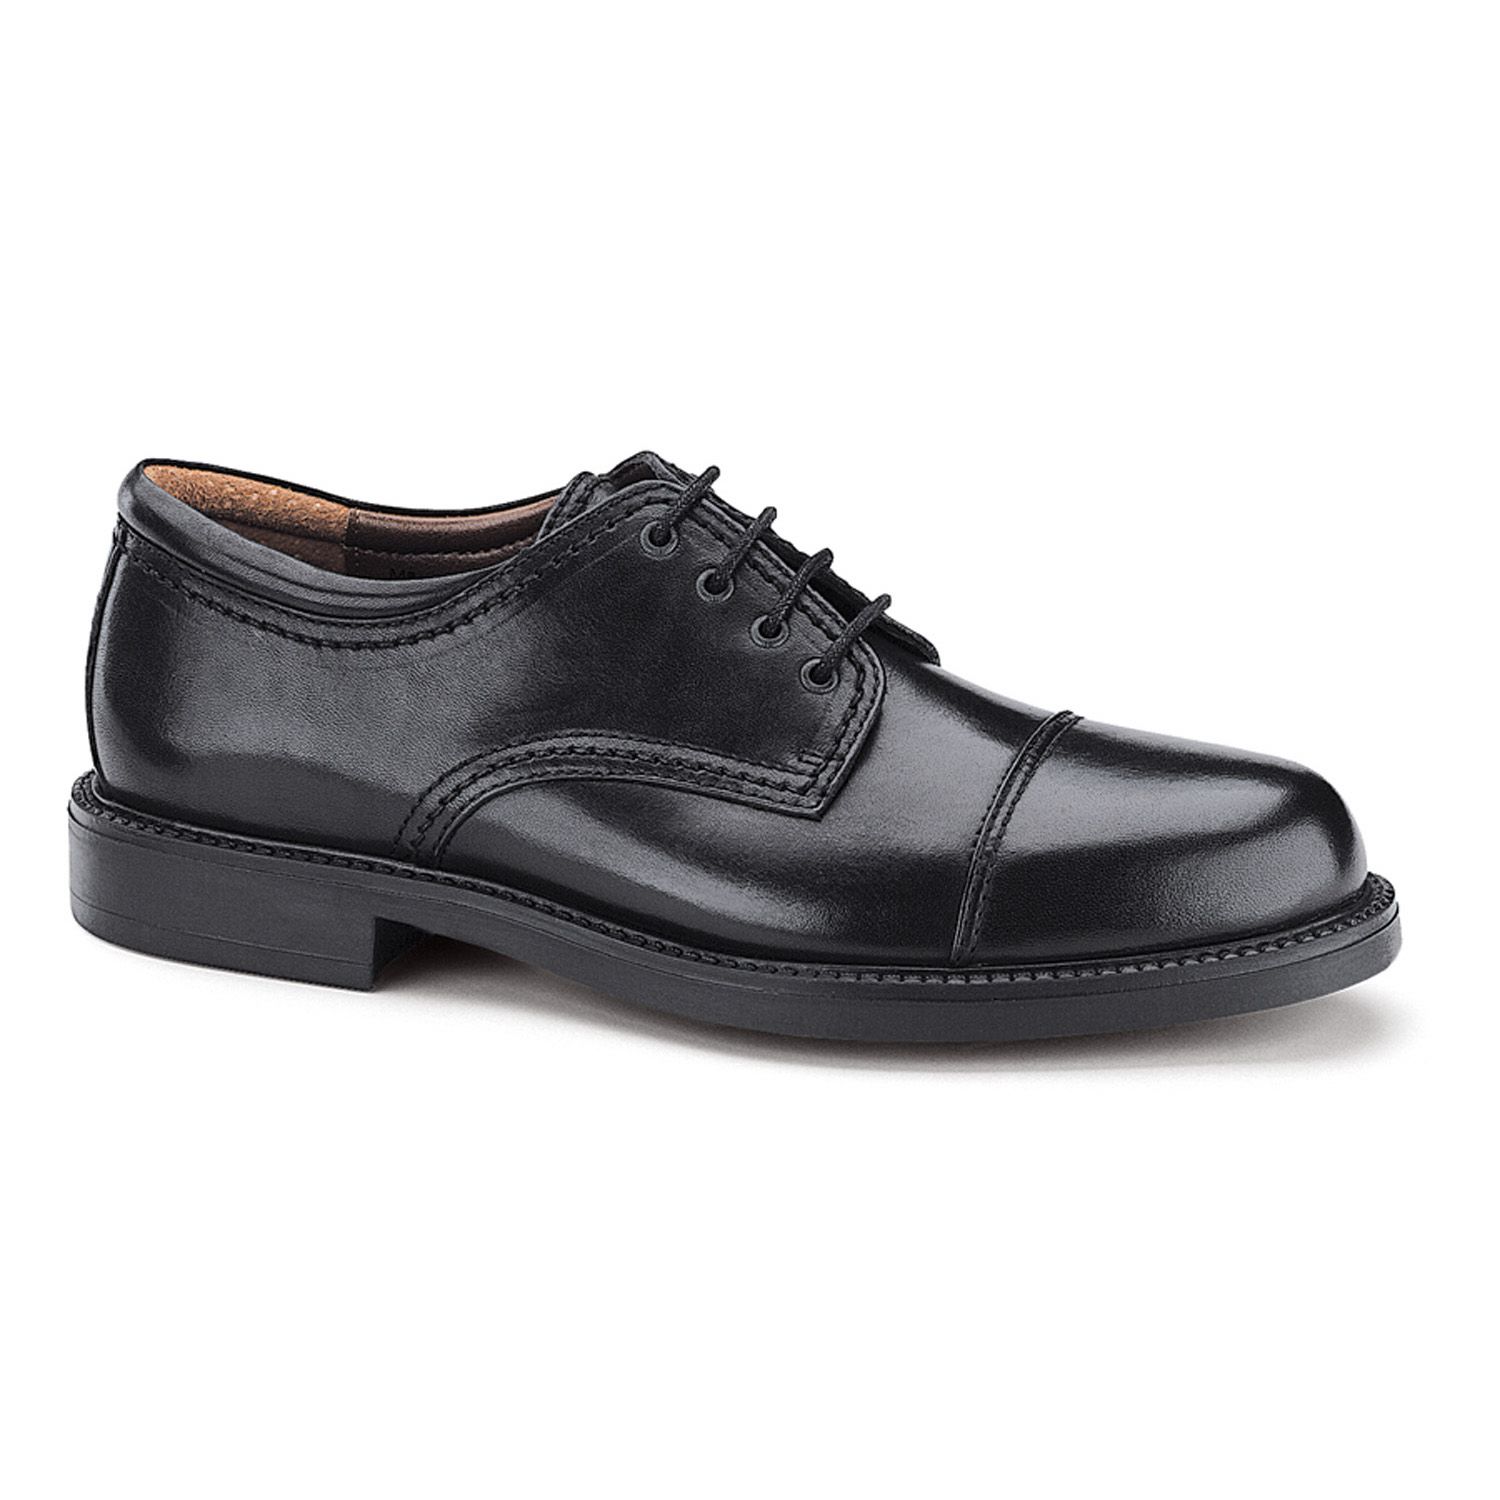 Men's Gordon  Oxford  Cap Toe Shoes - Black